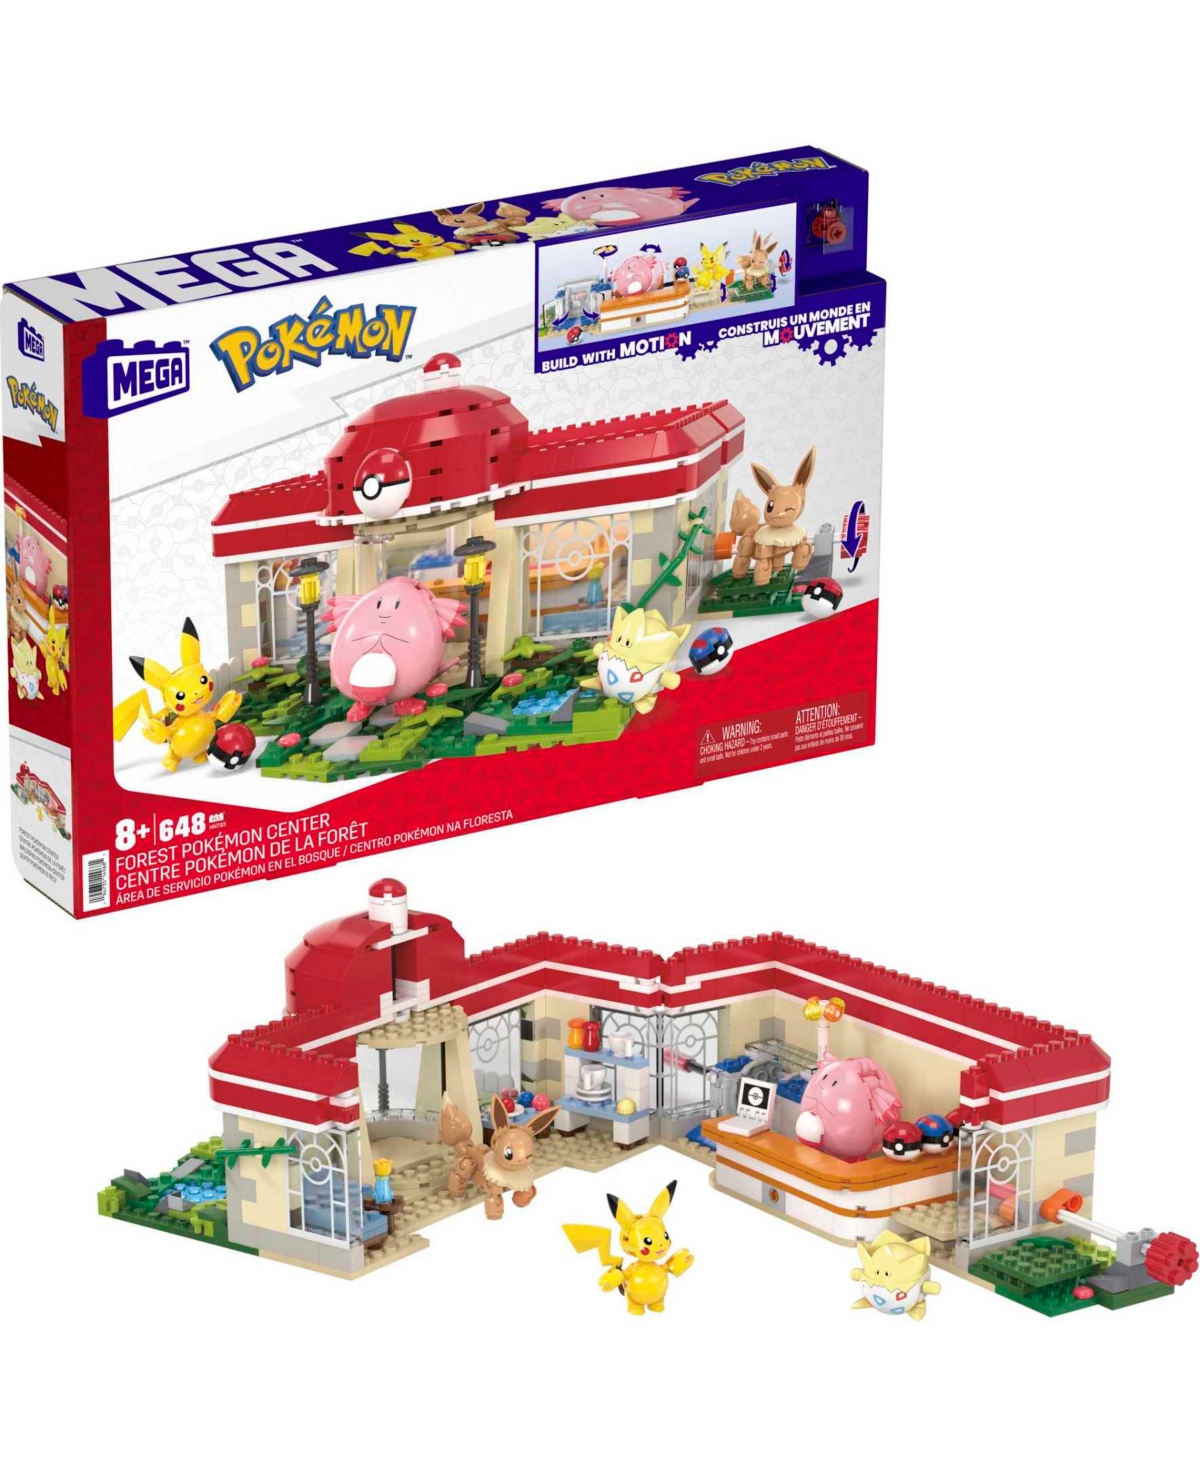 Pokémon Mega Pokemon Building Toy Kit, Forest Pokemon Center-648 Pieces In Multi-color